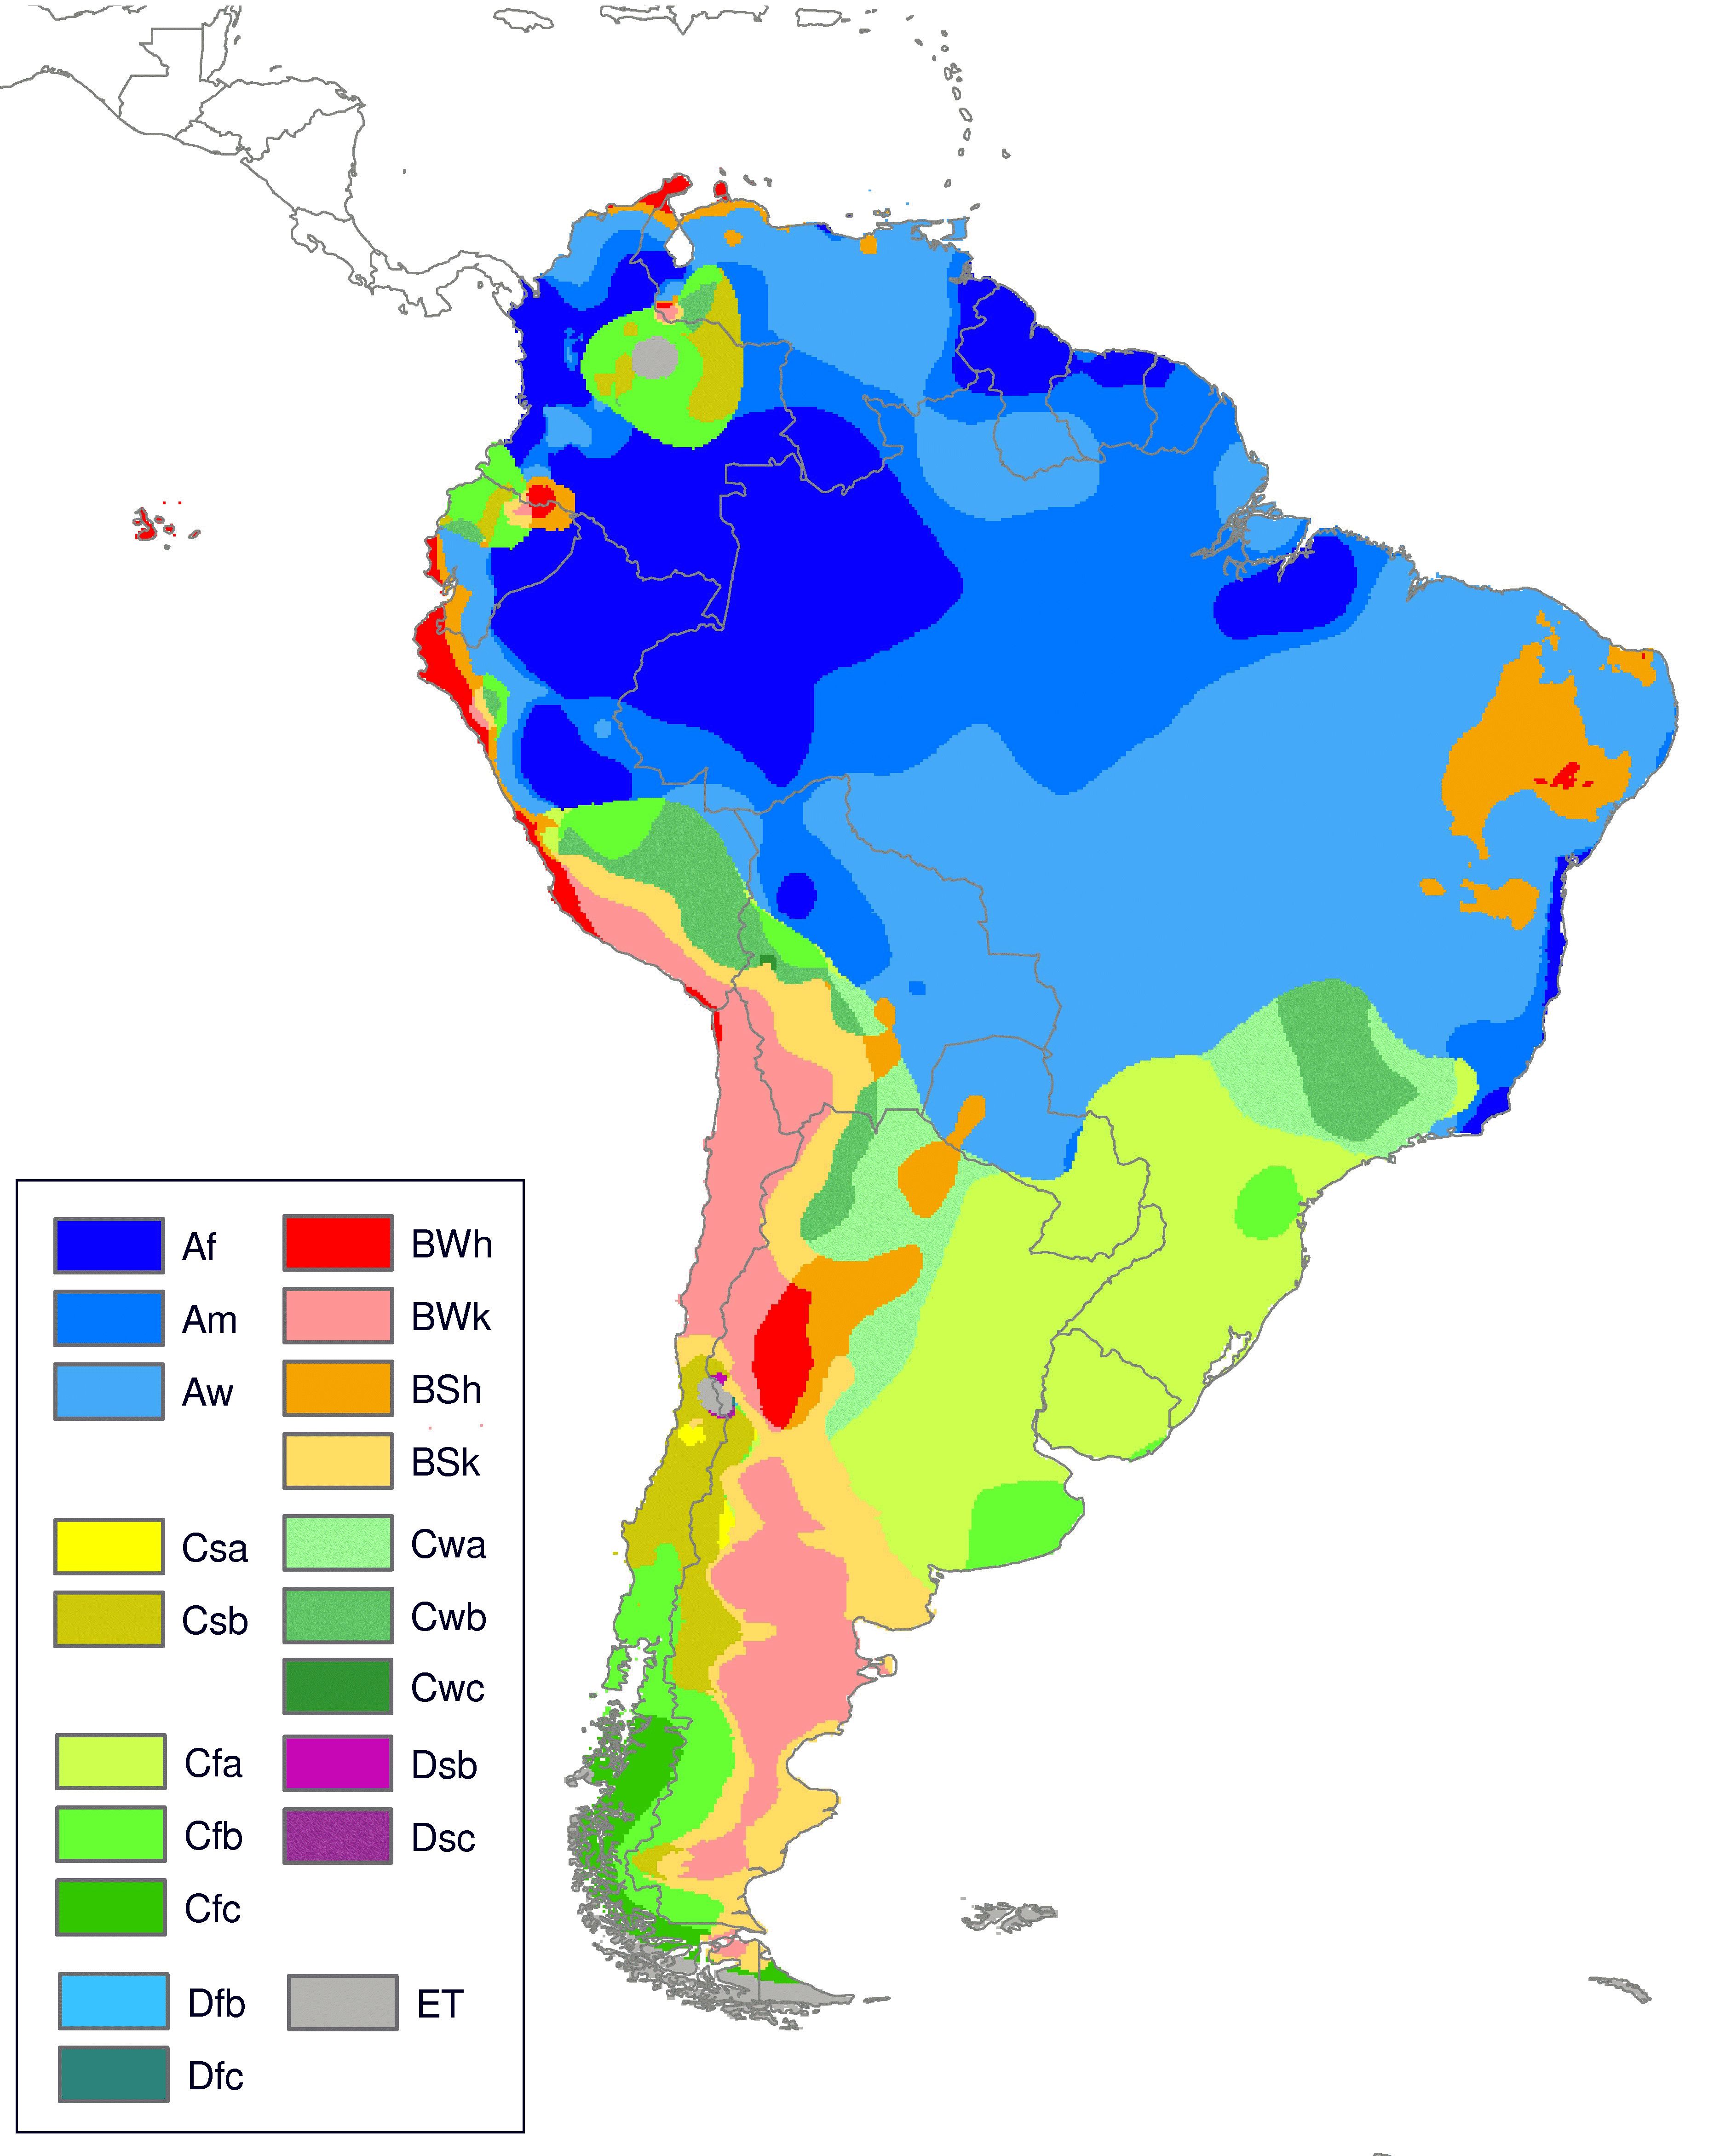 Confrontar Chorrito Oso köppen geiger climate classification map